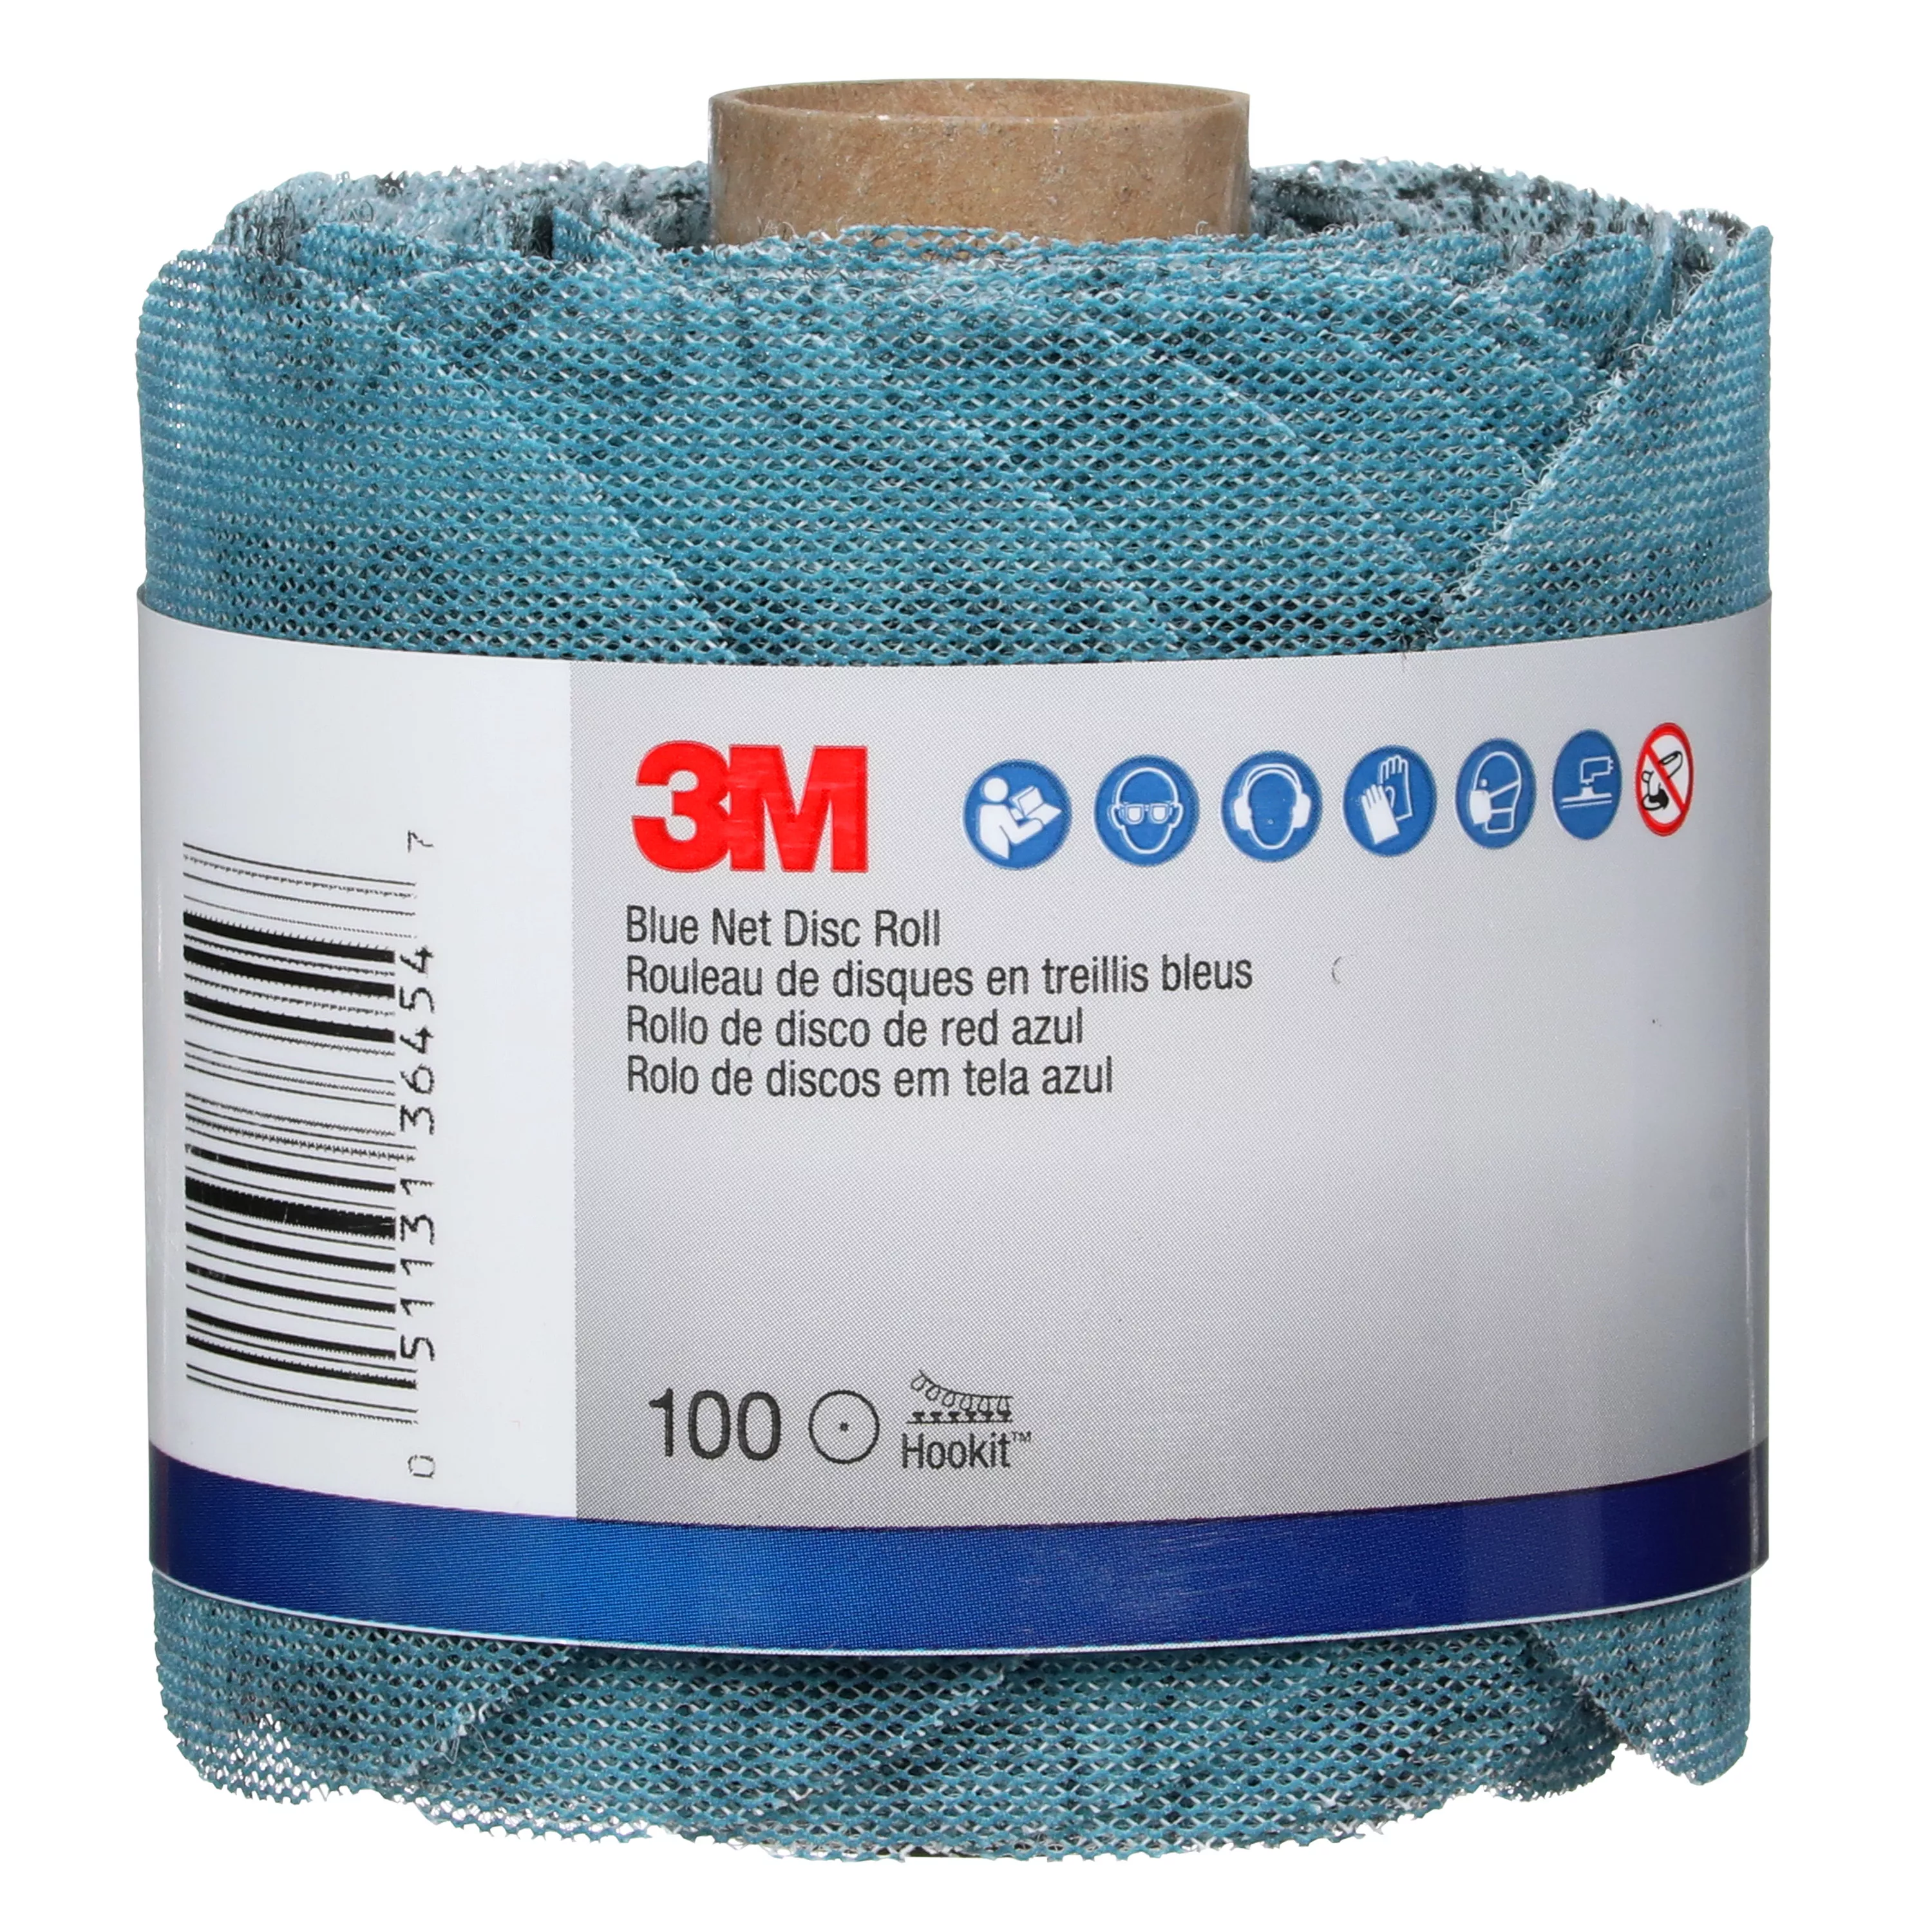 SKU 7100254367 | 3M™ Blue Net Disc Roll 36454